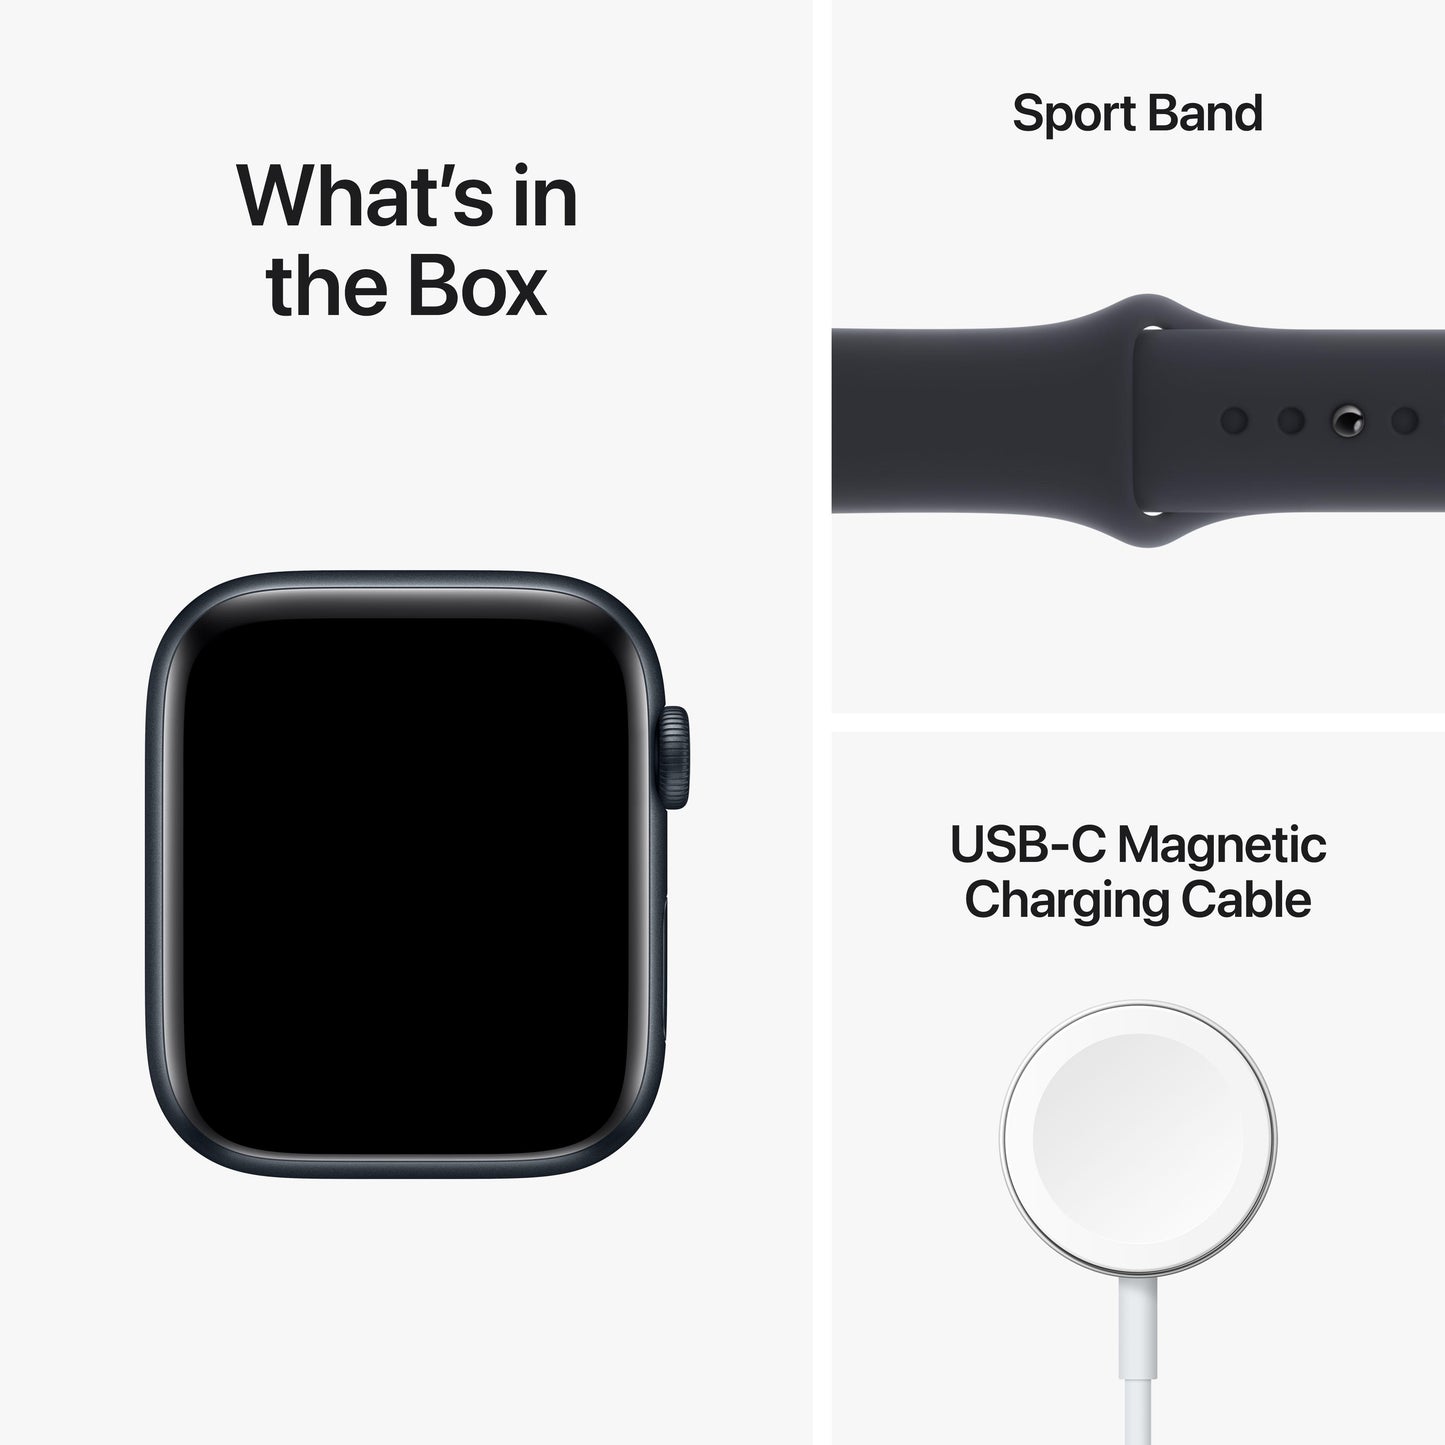 Apple Watch SE GPS + Cellular 44mm Midnight Aluminium Case with Midnight Sport Band - Regular